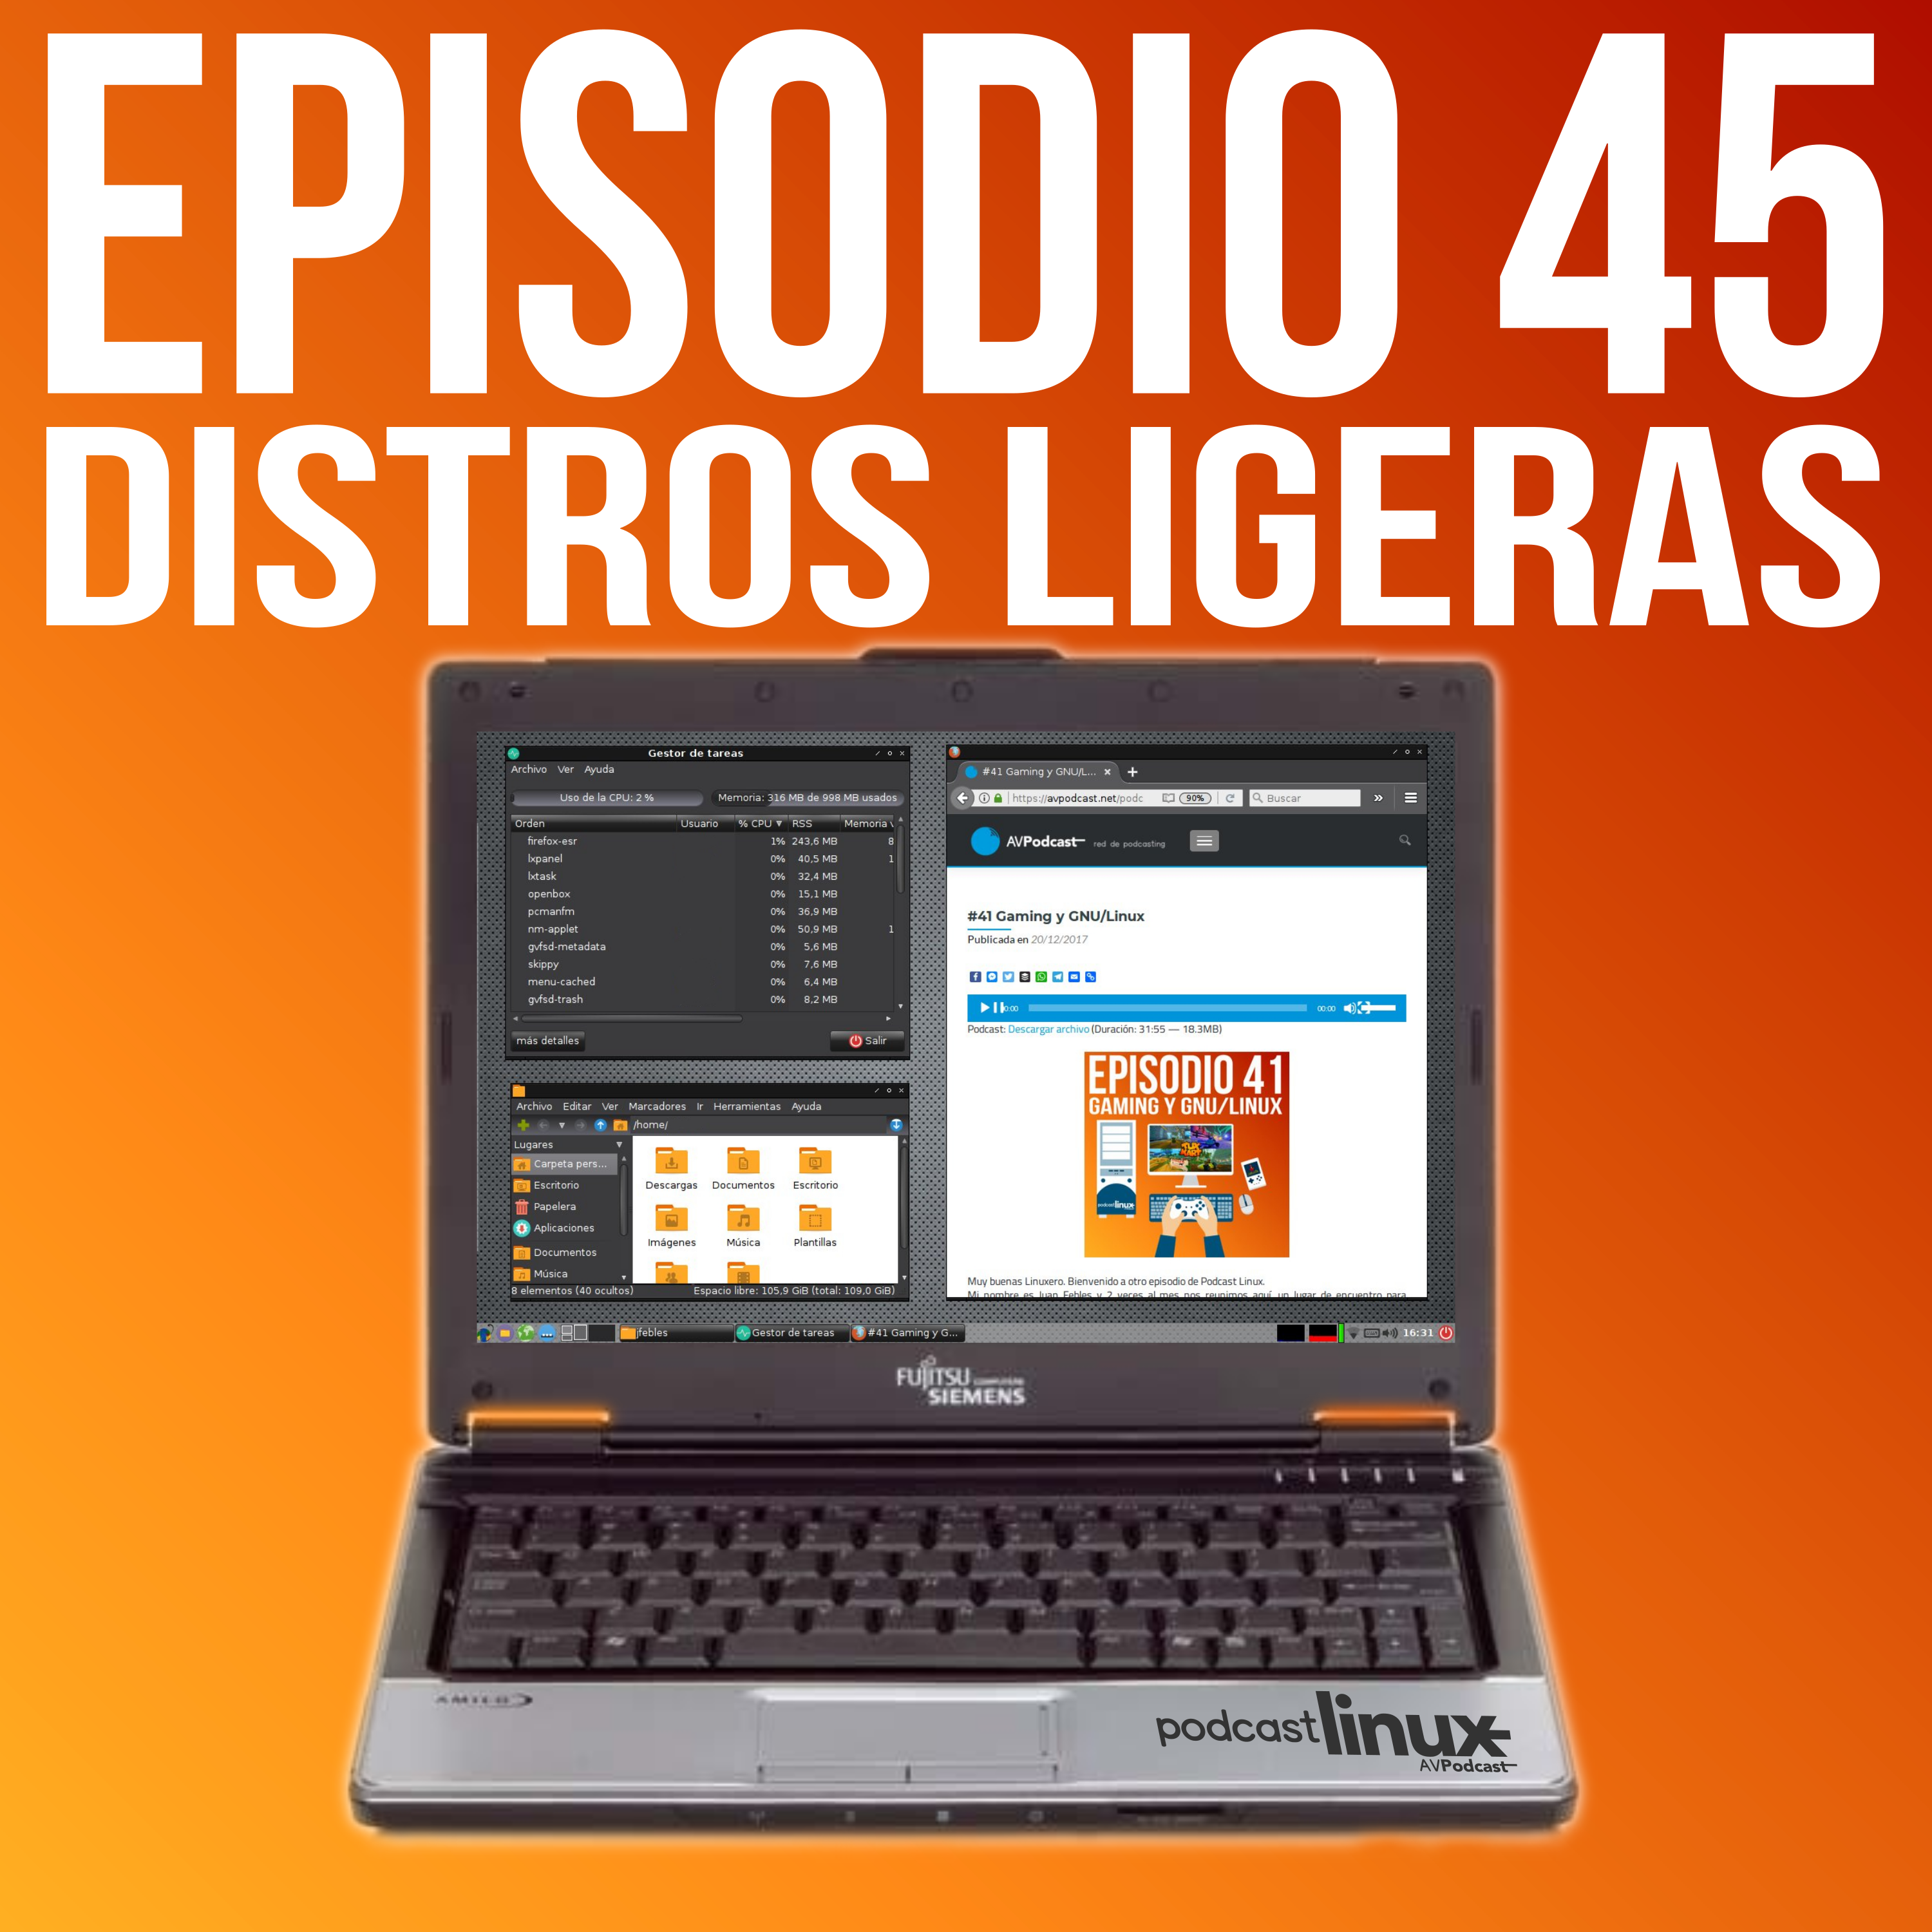 #45 Distros Ligeras